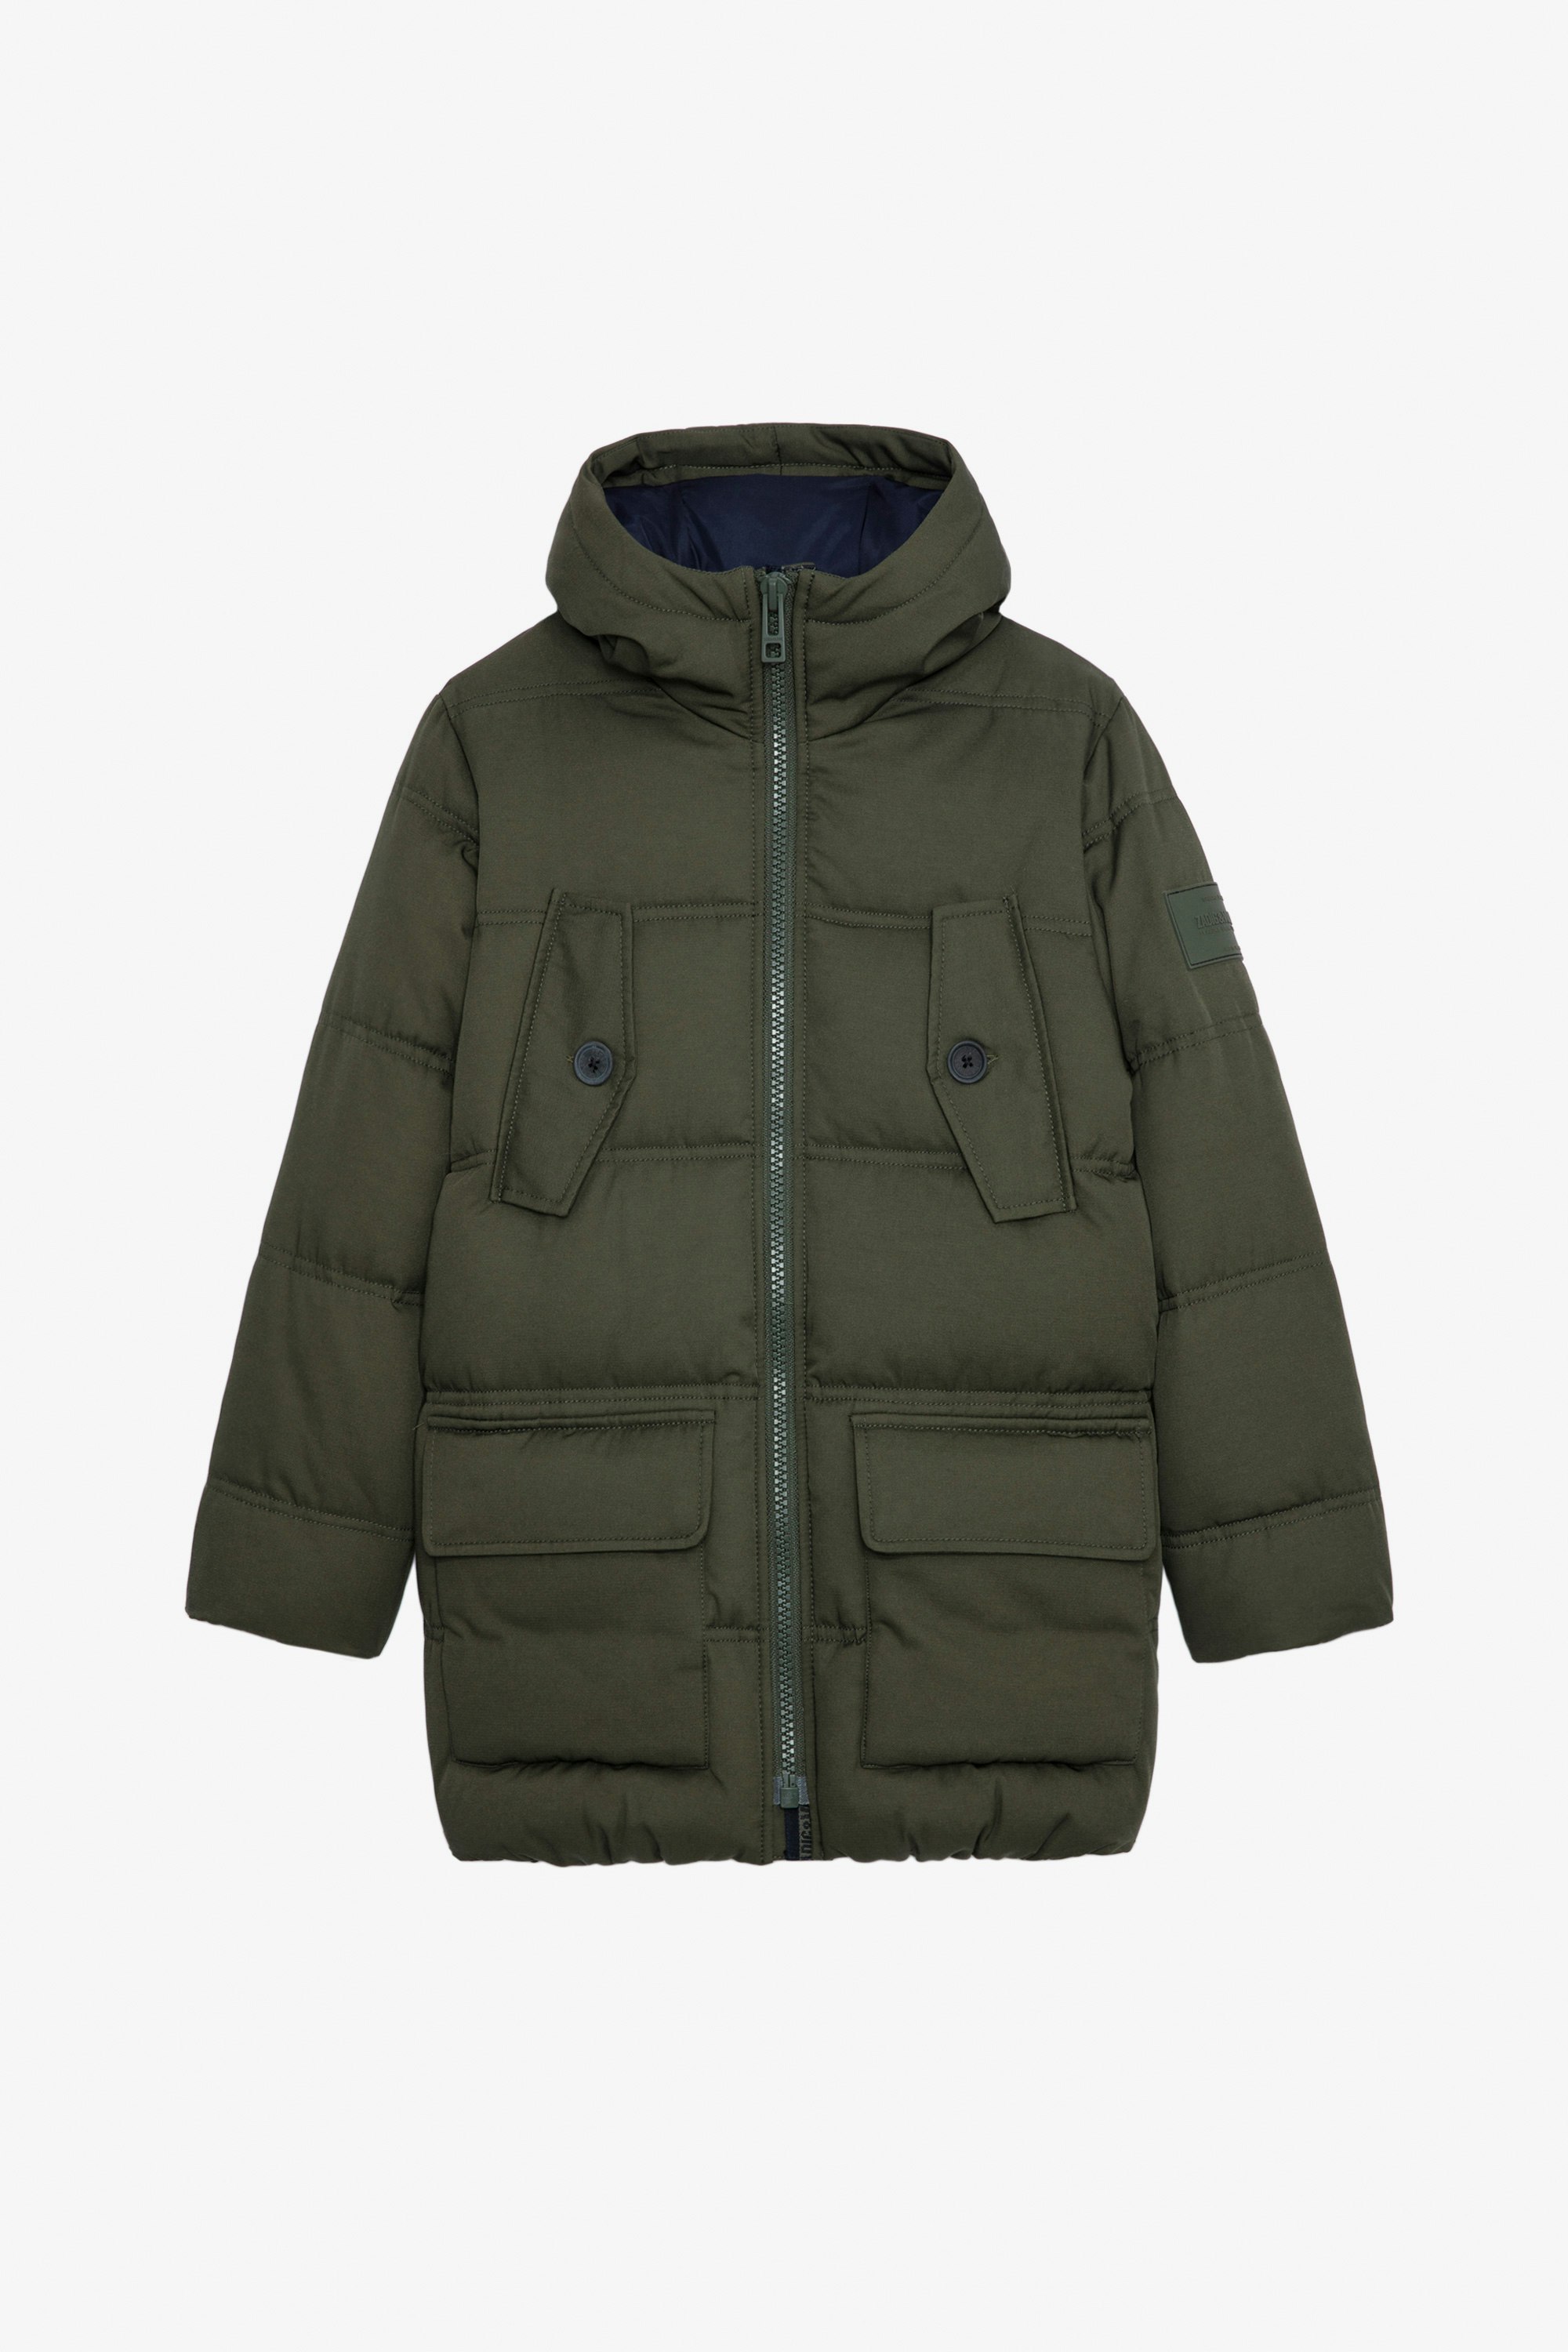 Bow Boys’ Puffer Coat Boys’ khaki water-repellent hooded puffer coat.